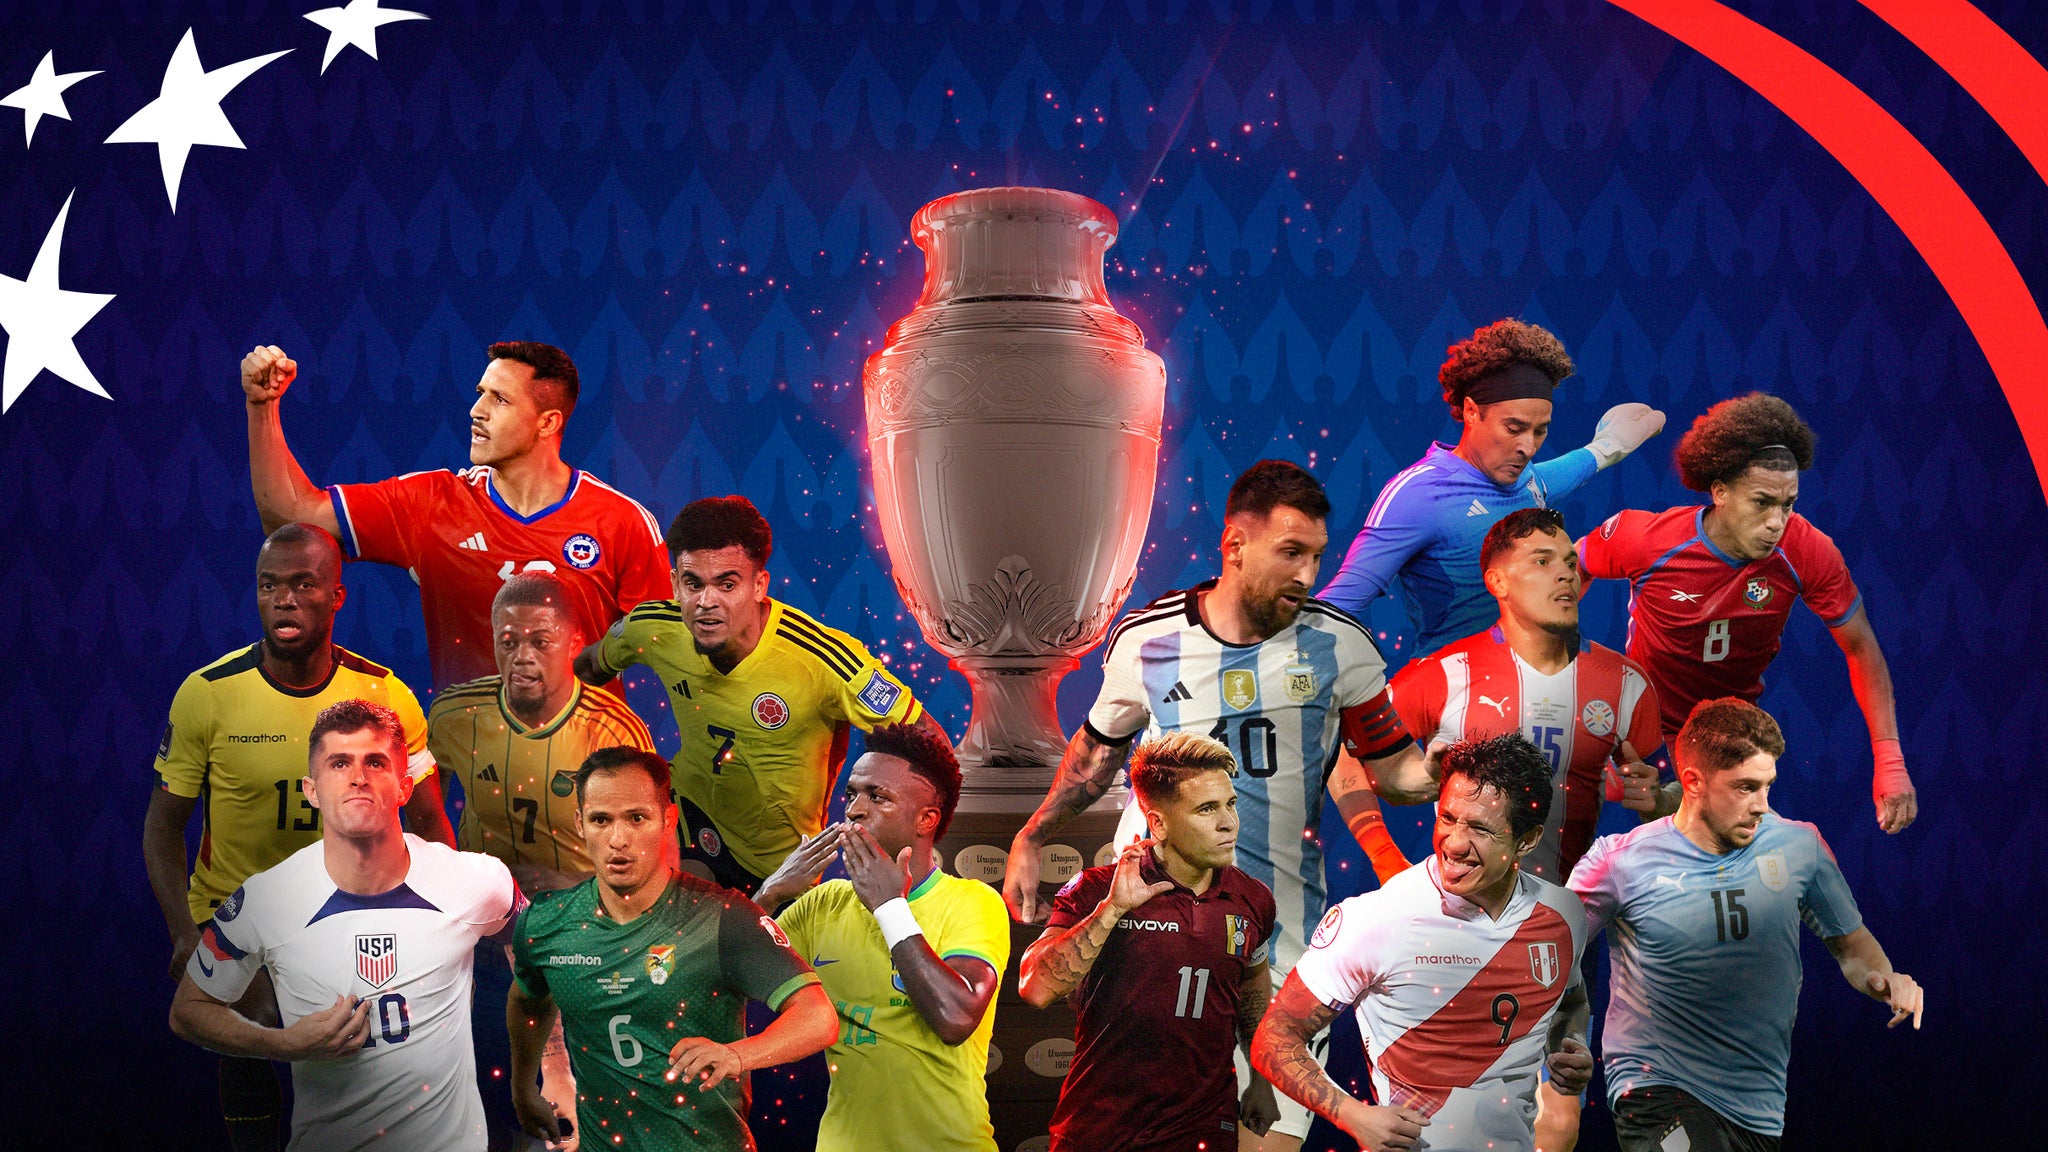 Copa America Soccer: Group D - Colombia v TBD